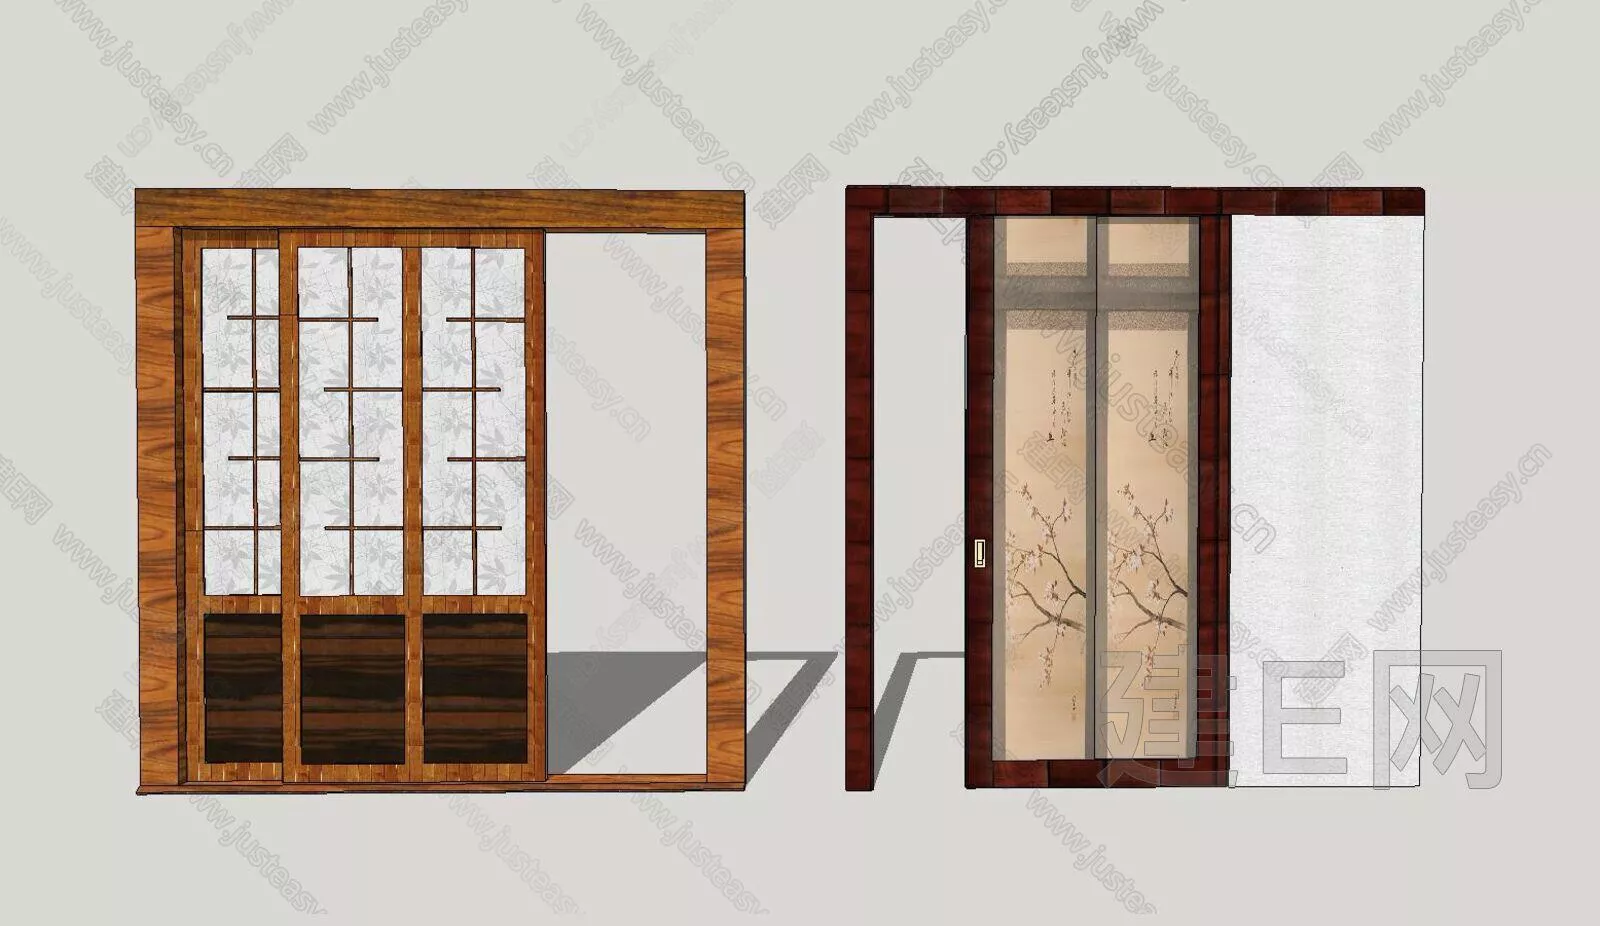 JAPANESE DOOR AND WINDOWS - SKETCHUP 3D MODEL - ENSCAPE - 105726074